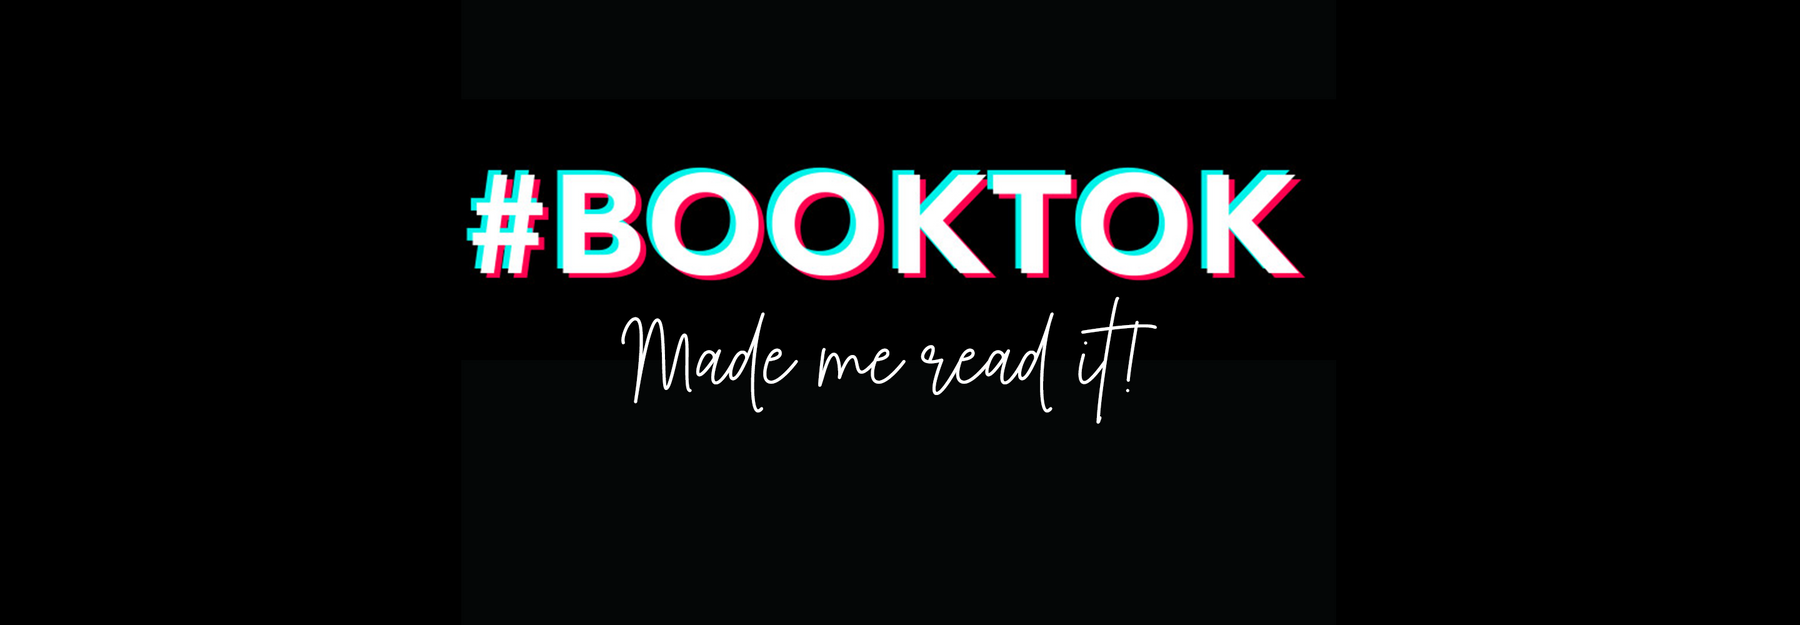 Booktok Recommendations: Best Books On TikTok